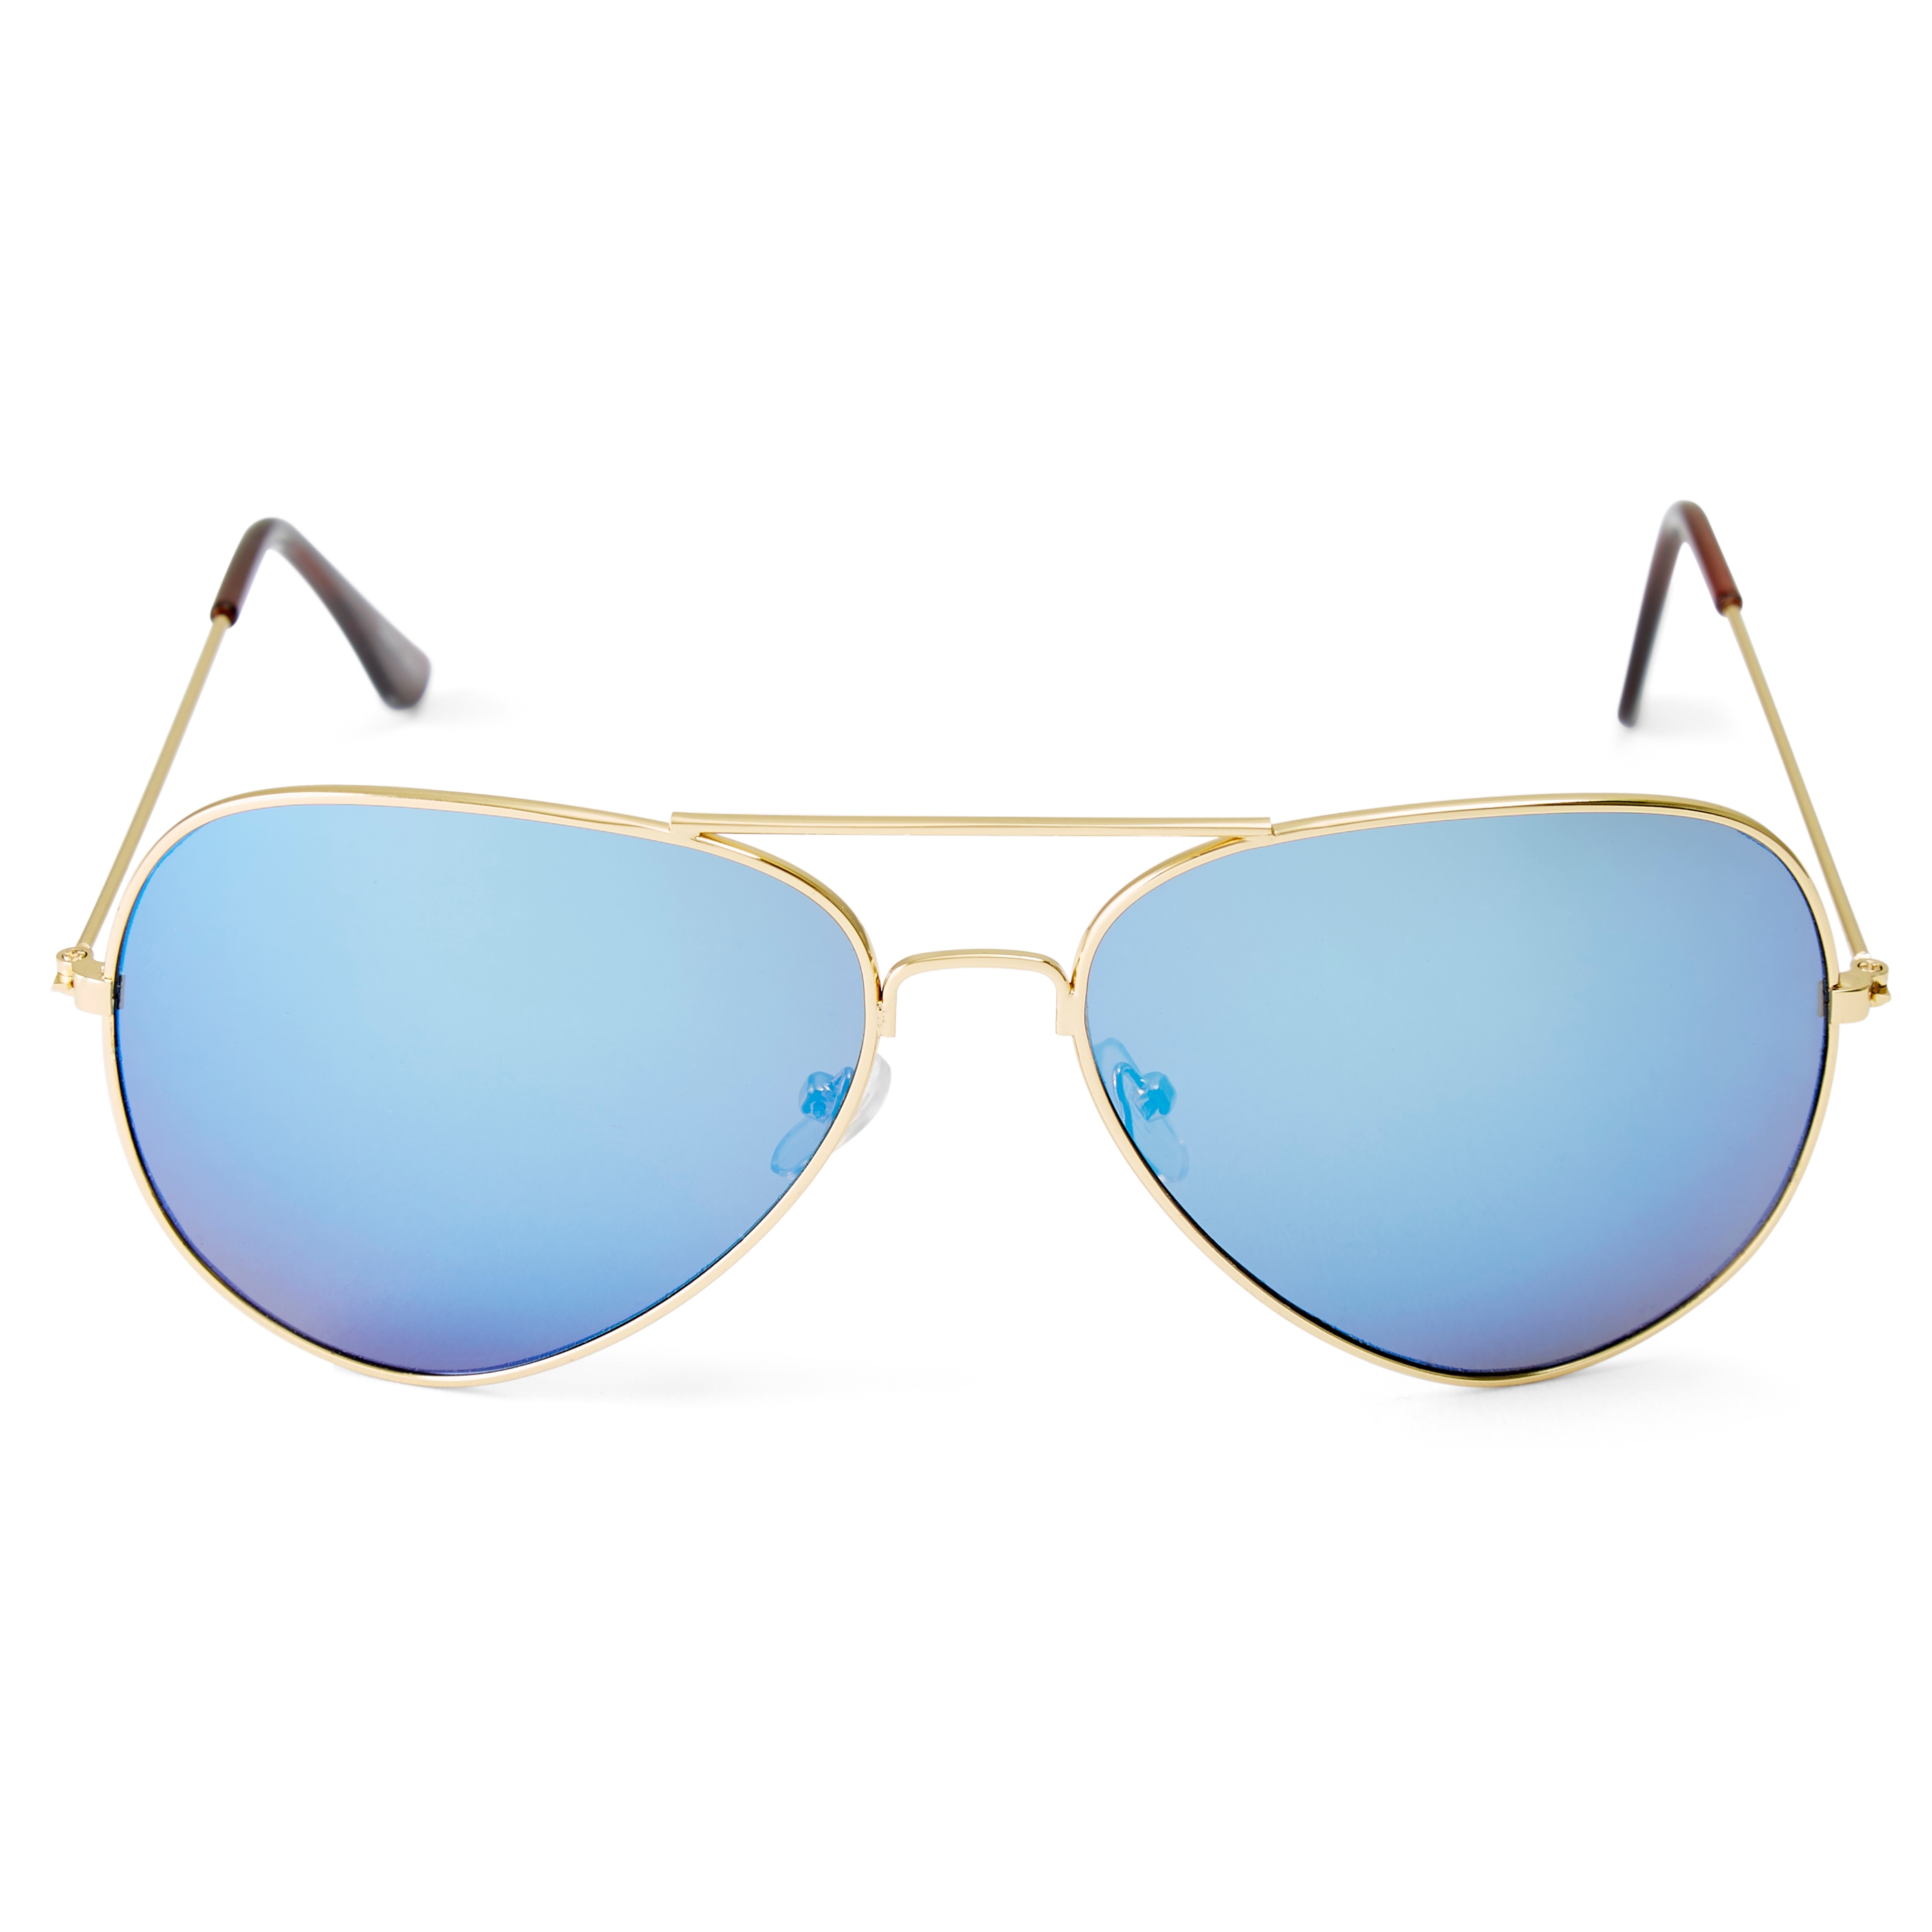 Gold-Tone & Iridescent Aviator Sunglasses - for Men - Paul Riley